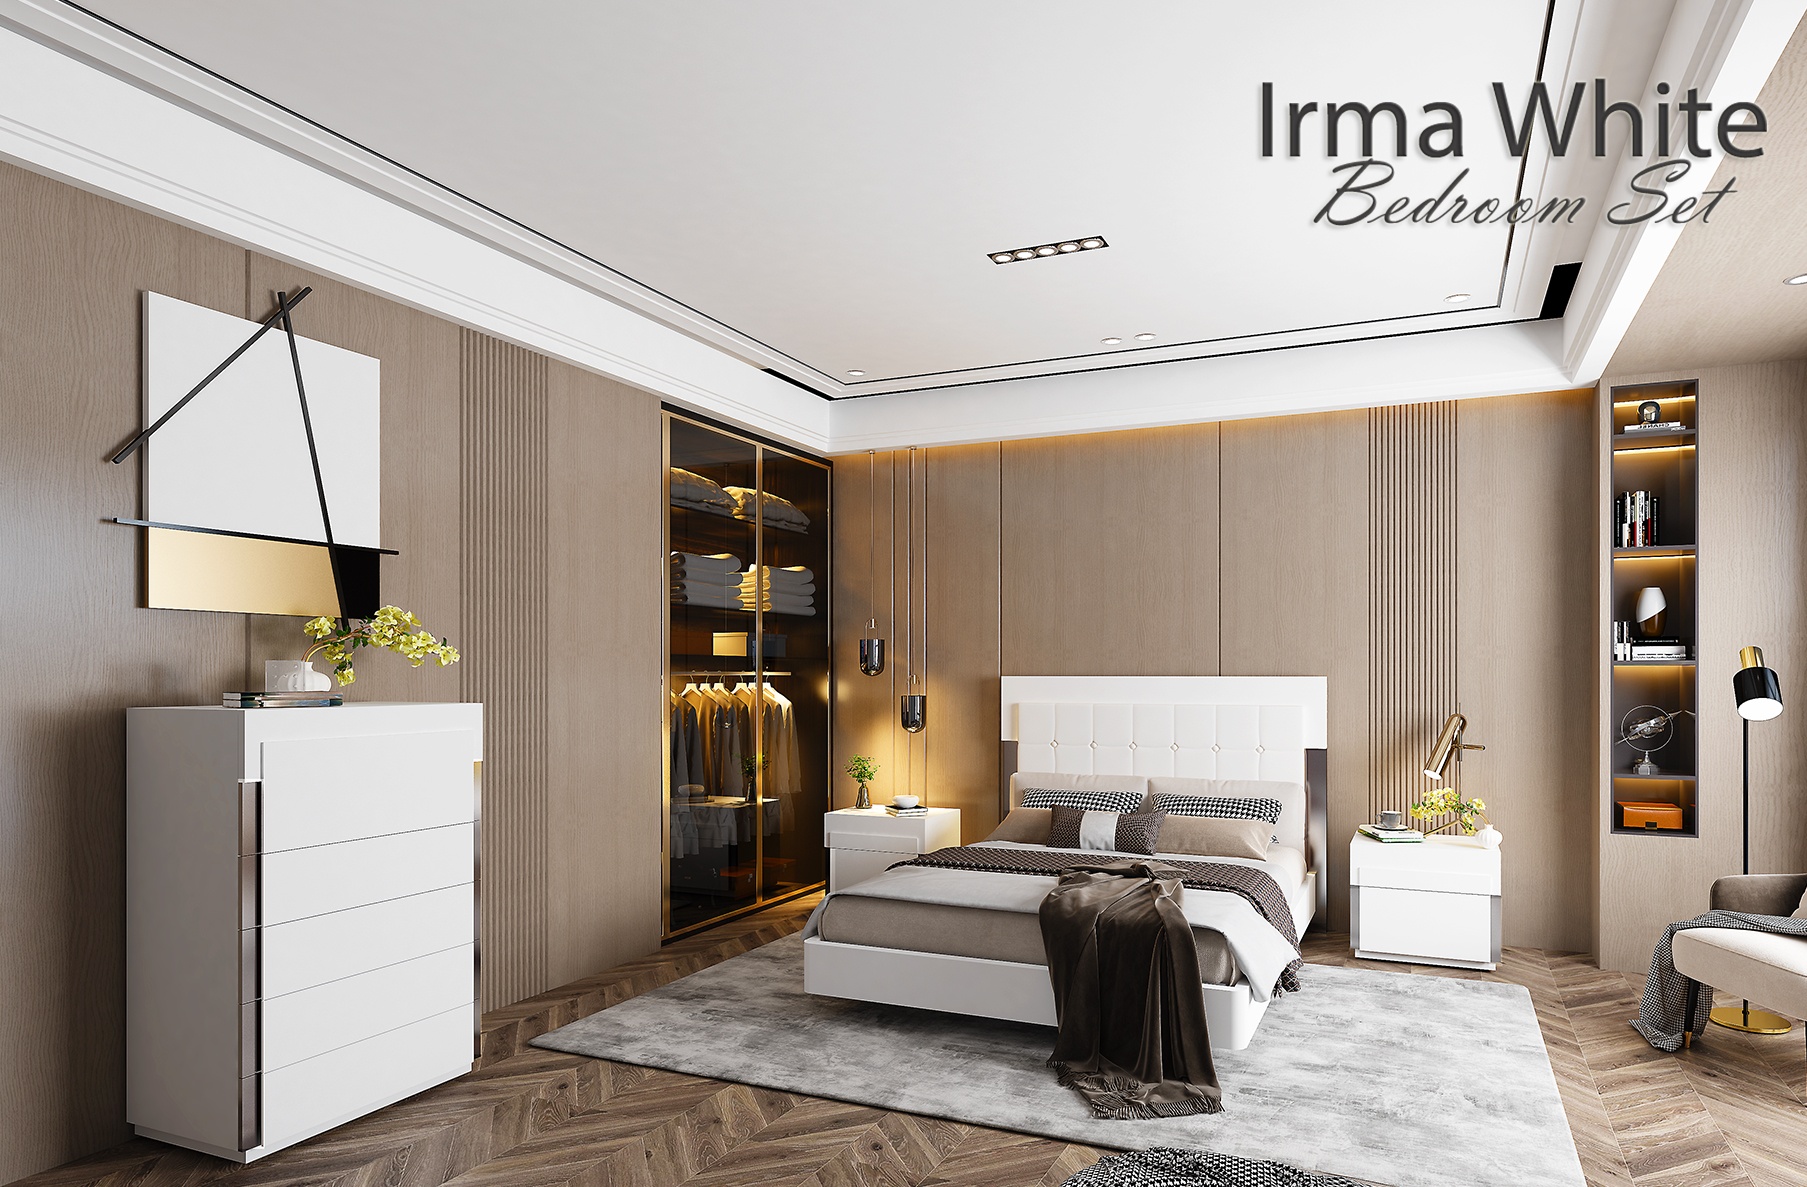 Irma White Bedroom set, Cheap